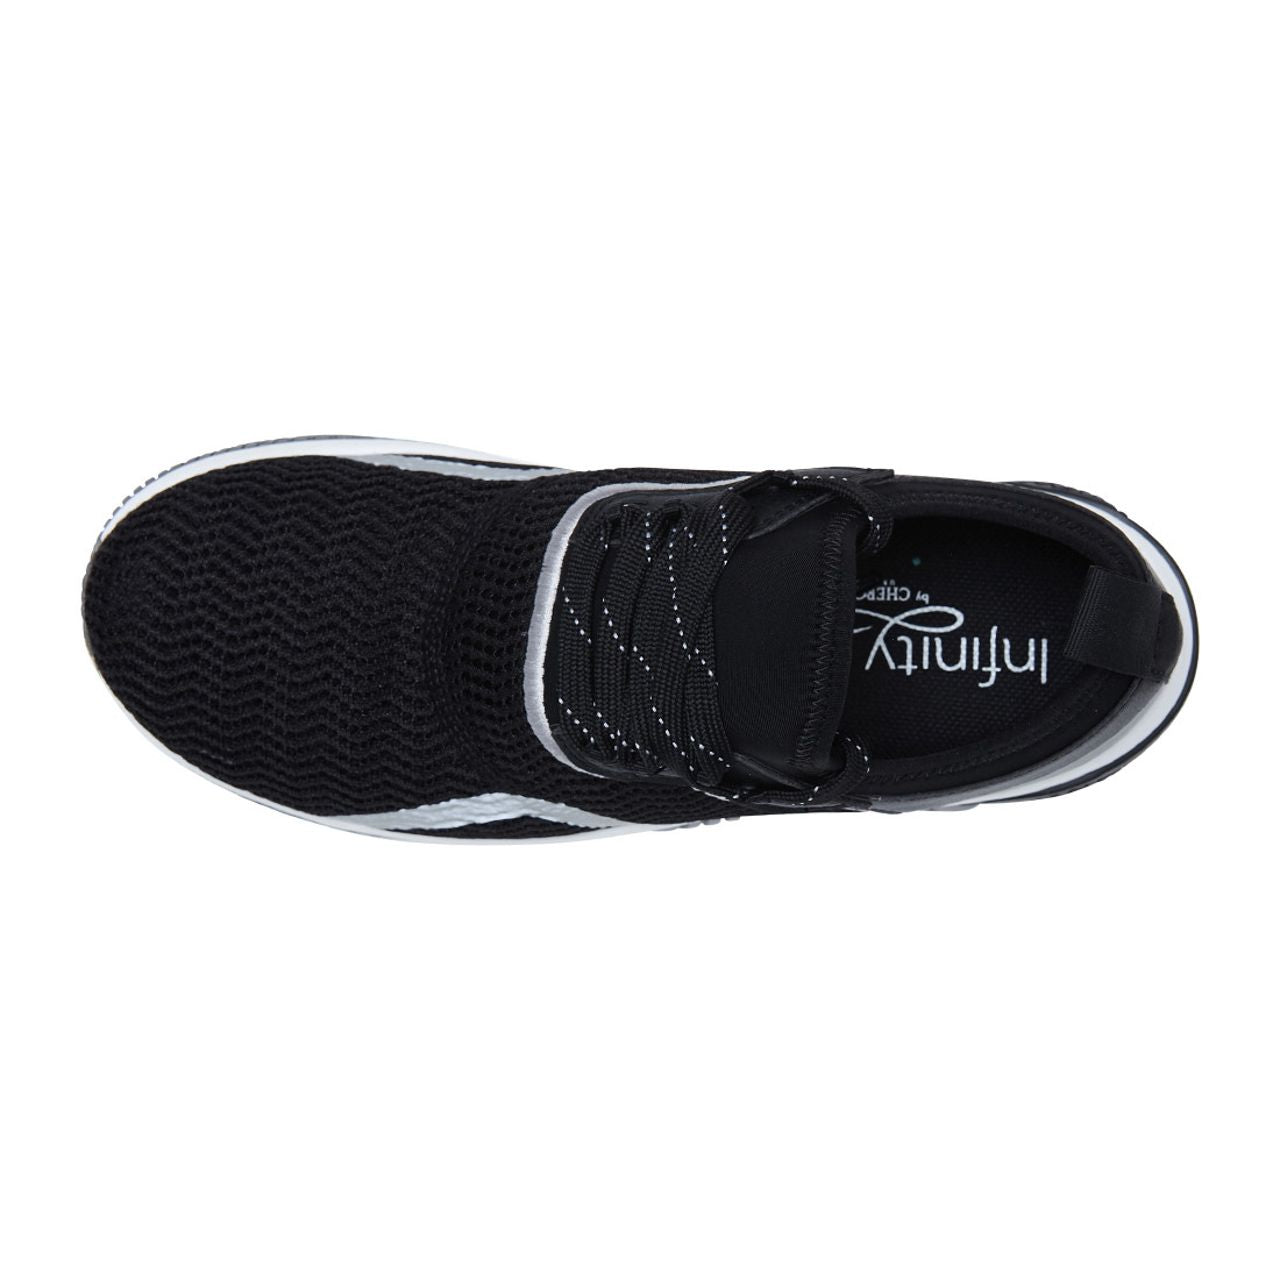 Black/Reflective/White - Cherokee Infinity Footwear DART